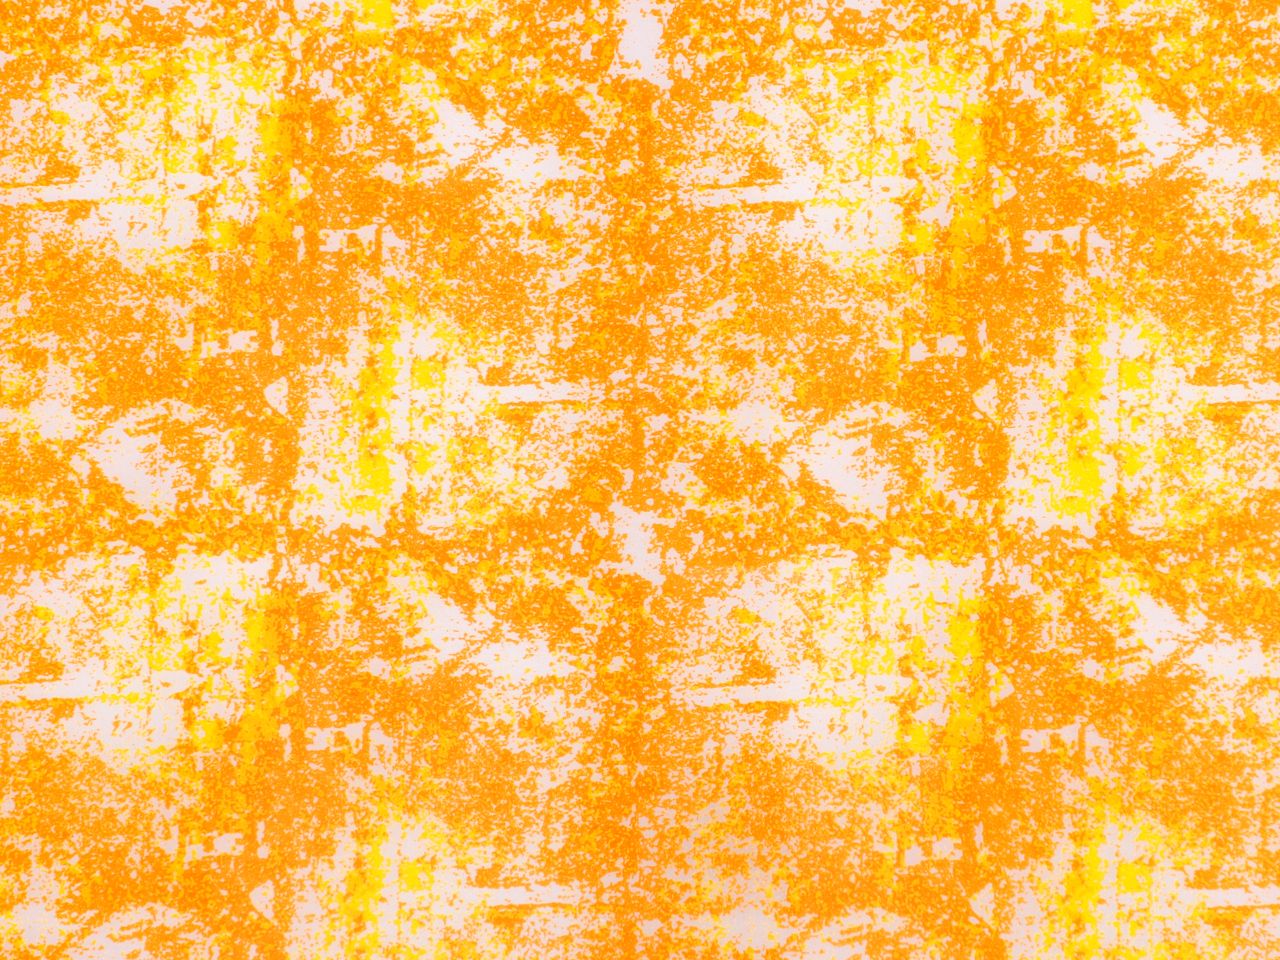 Transferfolie: Antique, Kakaobutter, Orange-Beige, 38 x 23 cm